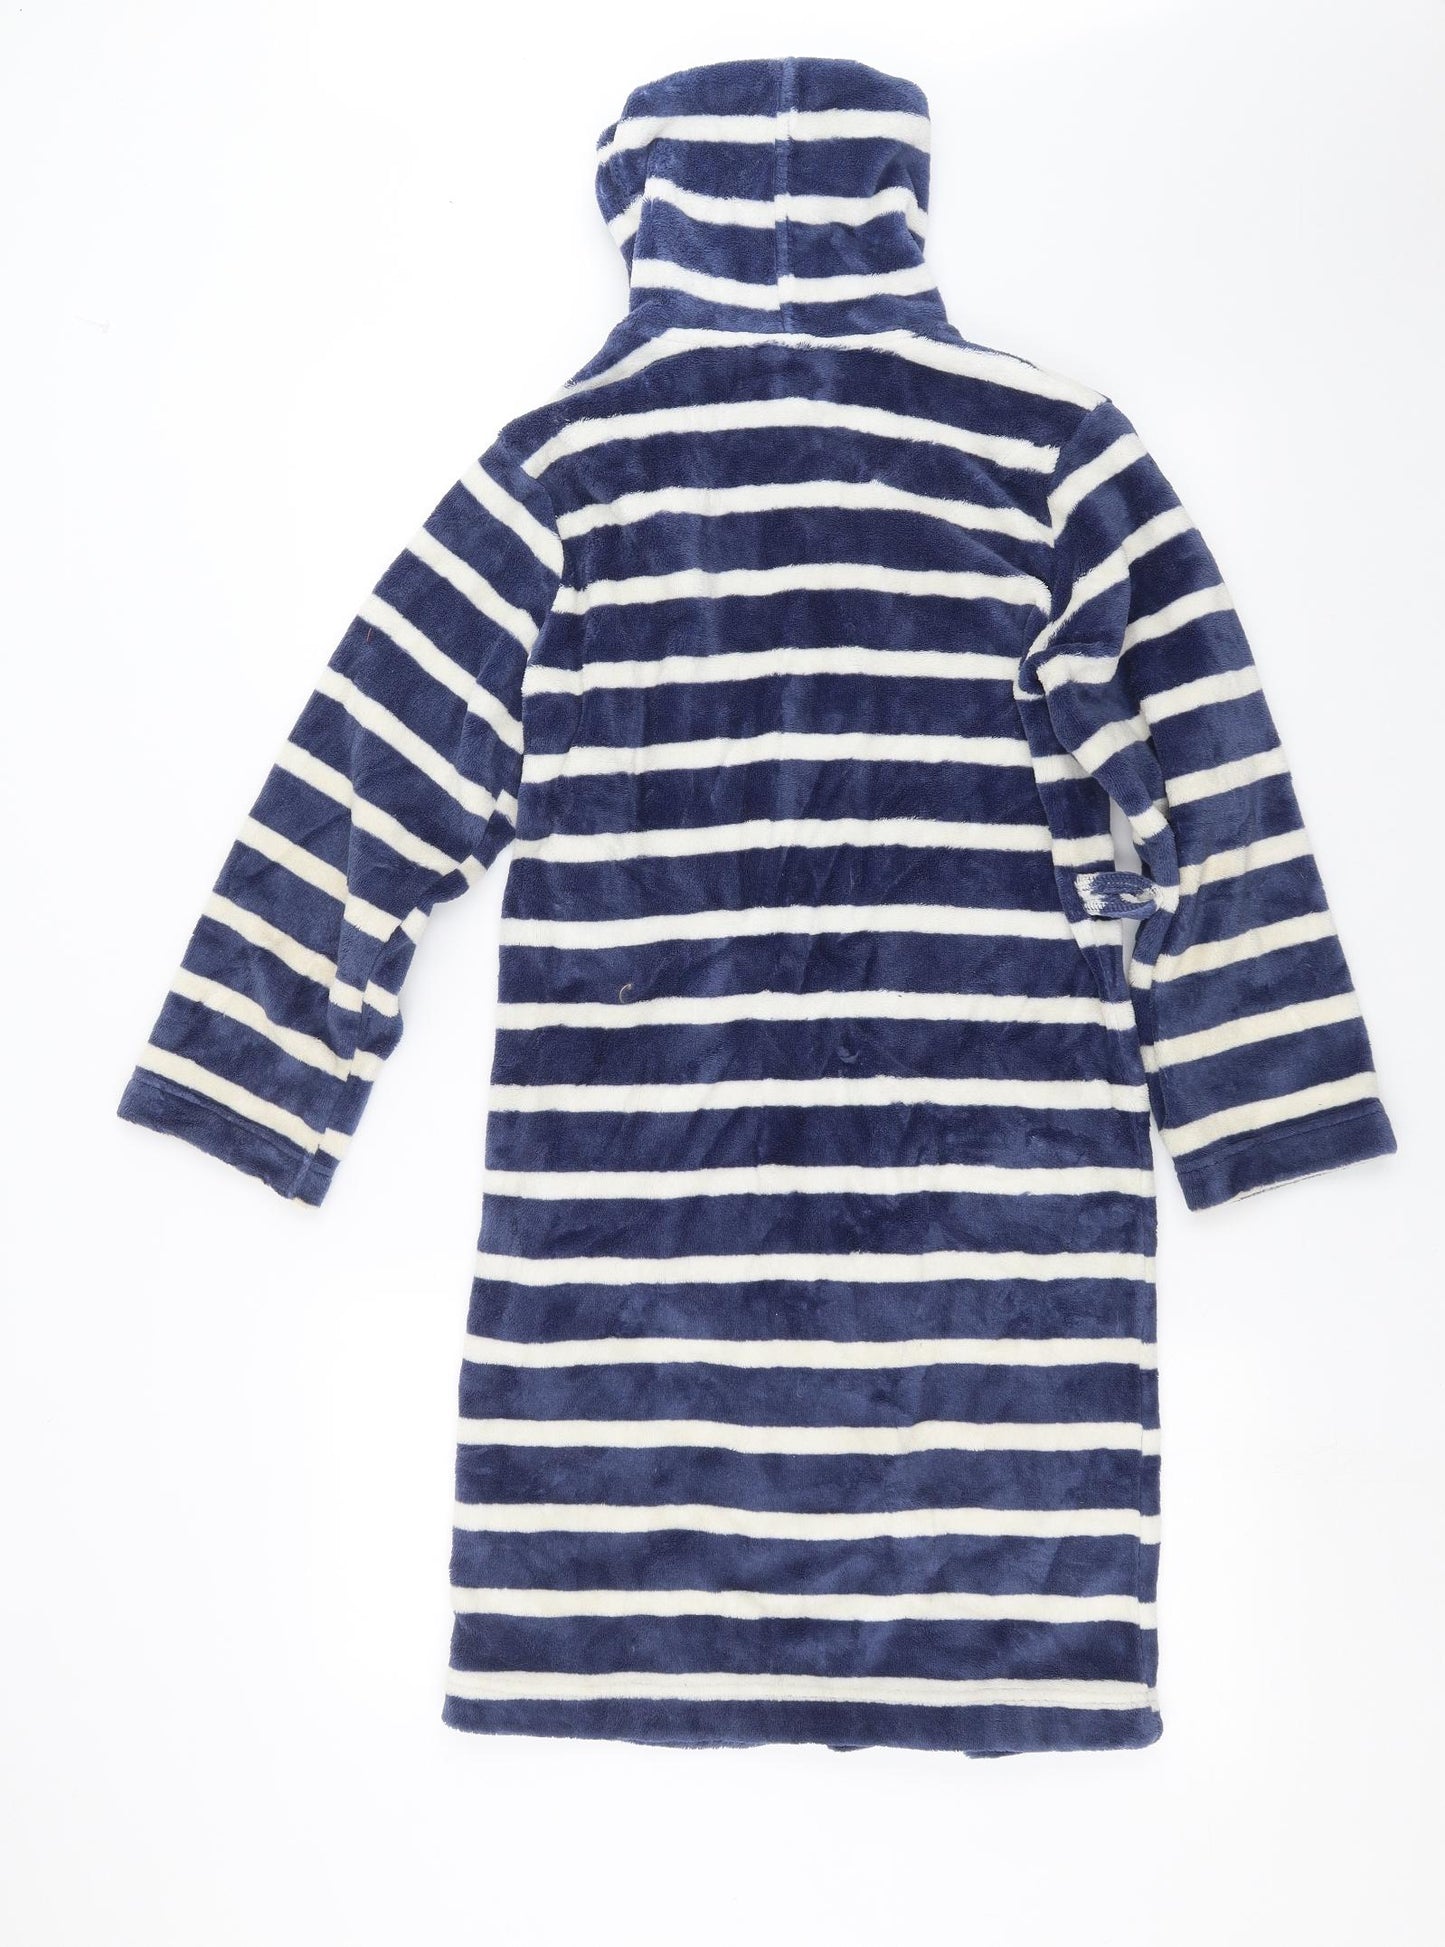 John Lewis Boys Blue Striped   Robe Size 11 Years